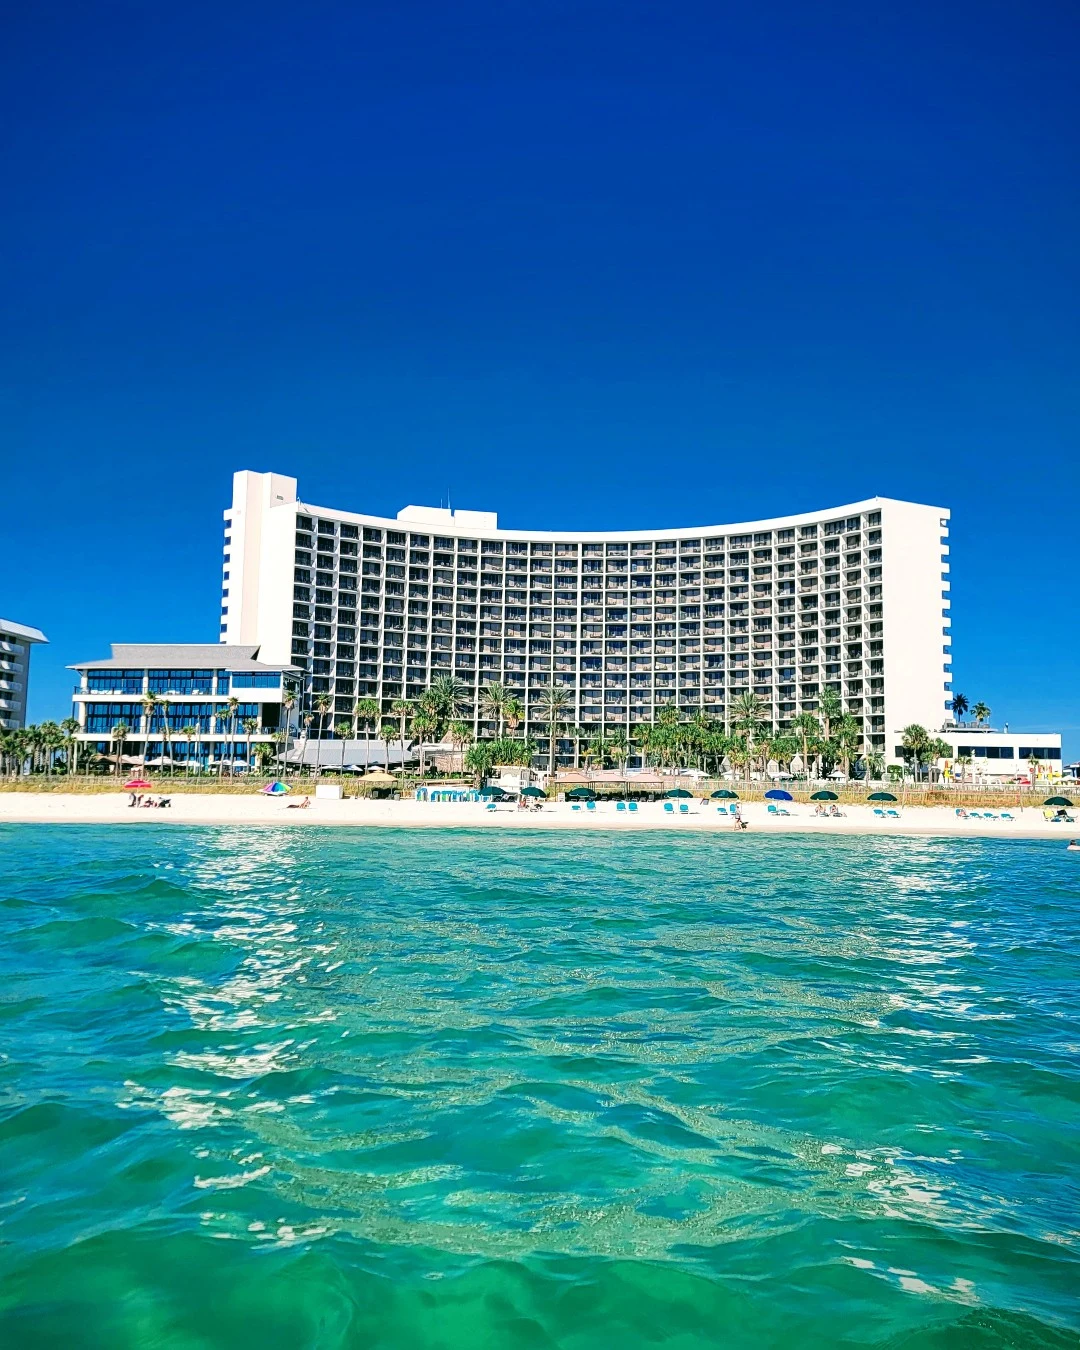 Holiday Inn Resort Panama City Beach, Panama City Beach